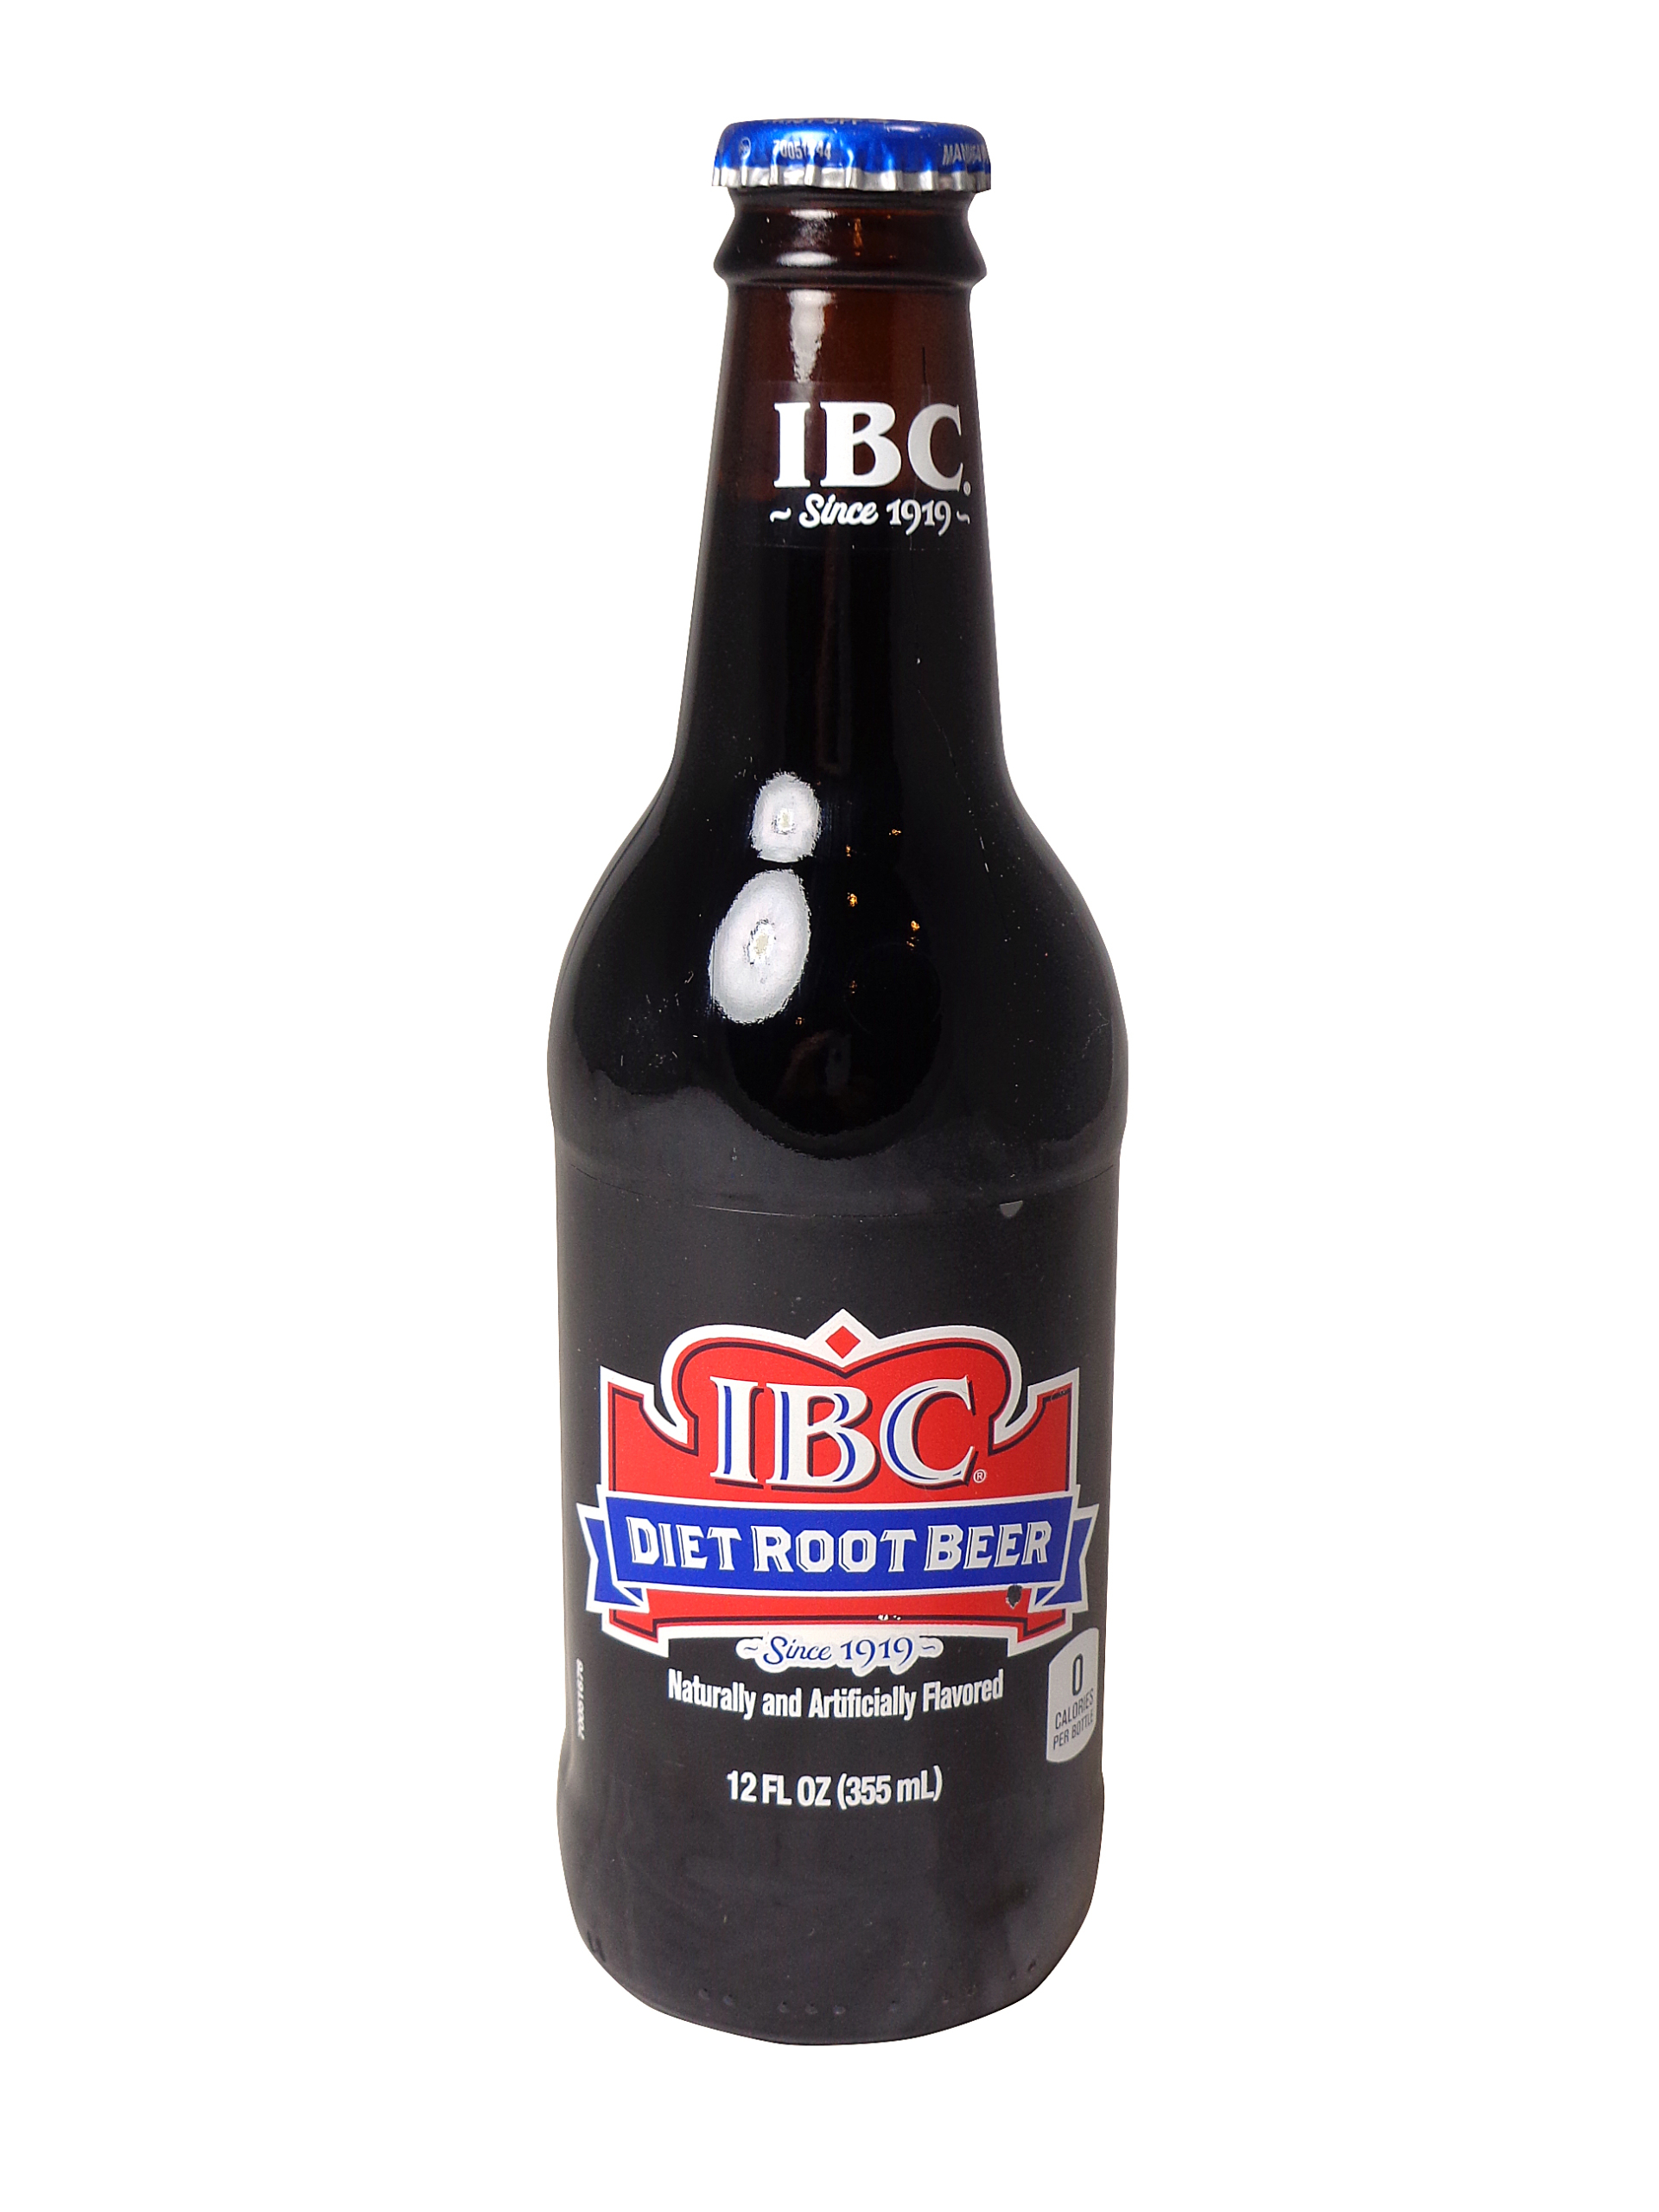 Does IBC Root Beer Have Caffeine: Deciphering Ingredients